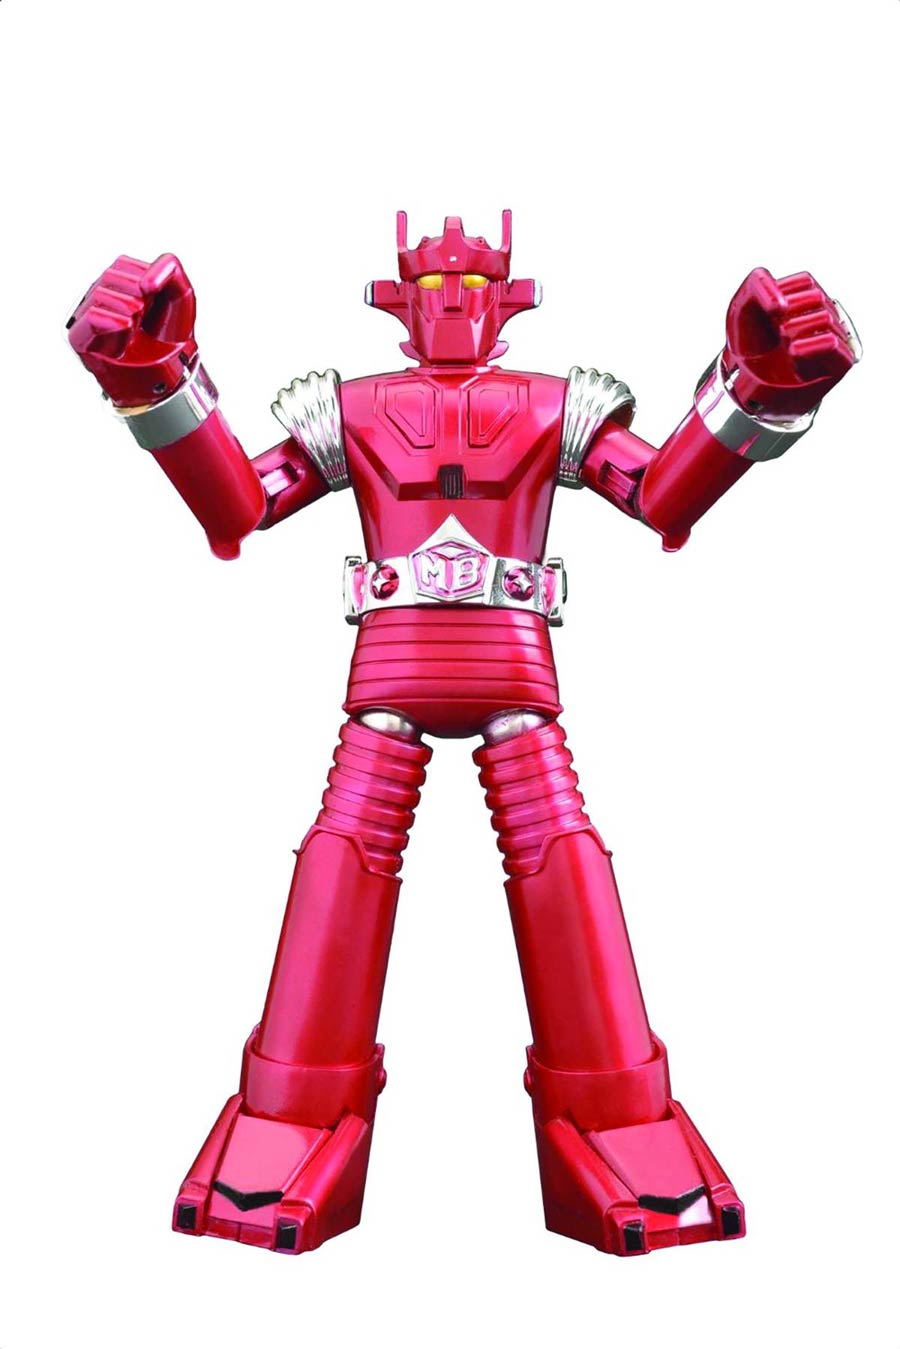 Dynamite Action No-5 Super Robot Mach Baron Figure